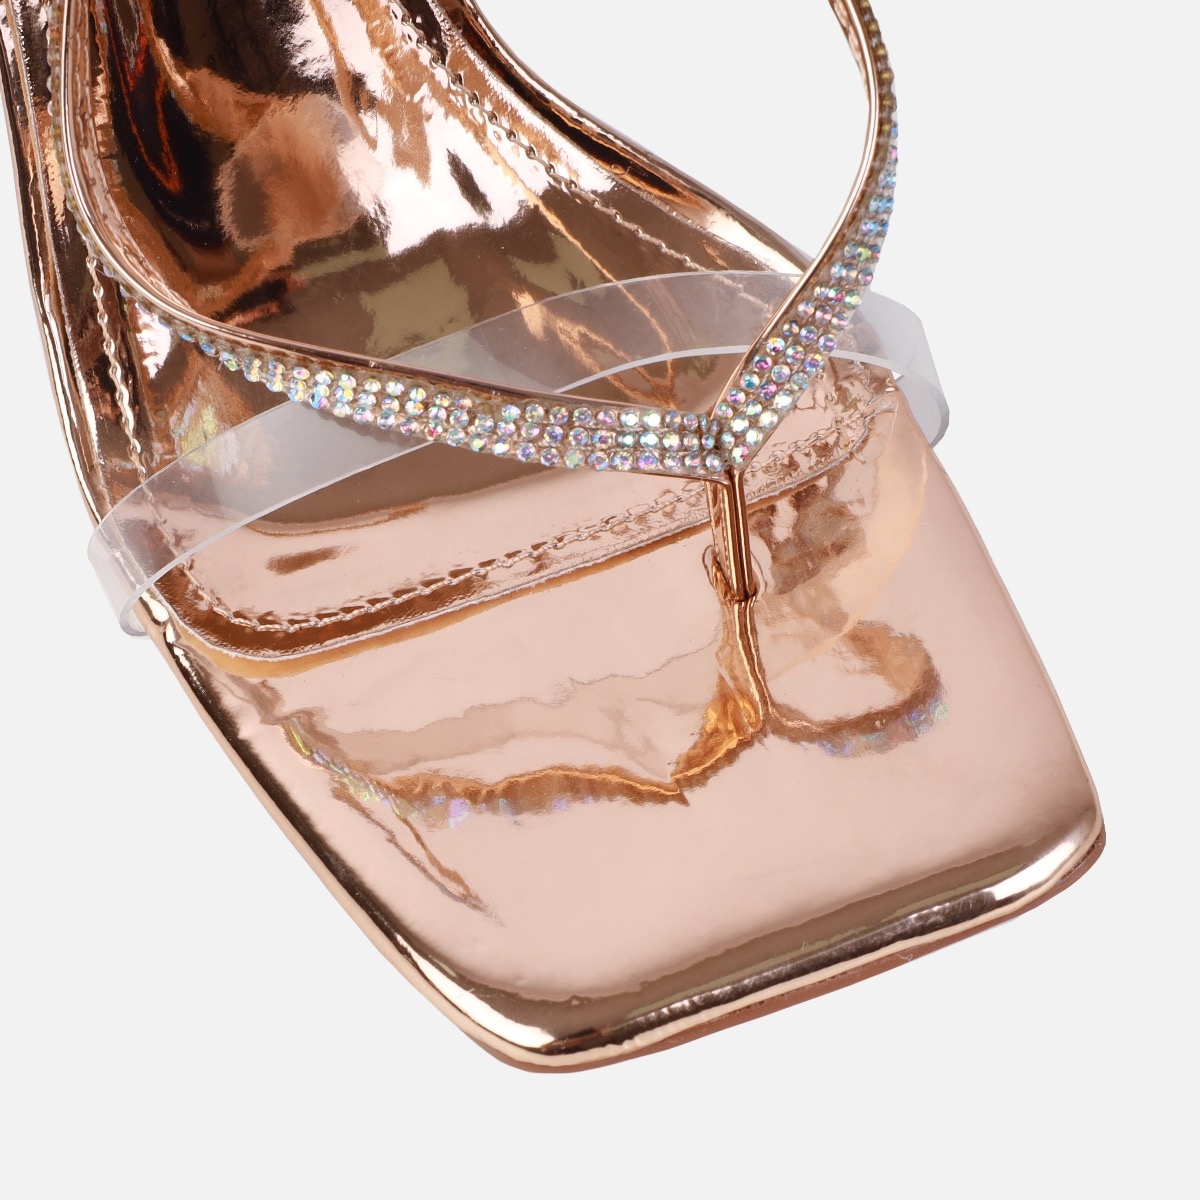 Office hesitation heeled sandals in rose gold | ASOS-hkpdtq2012.edu.vn